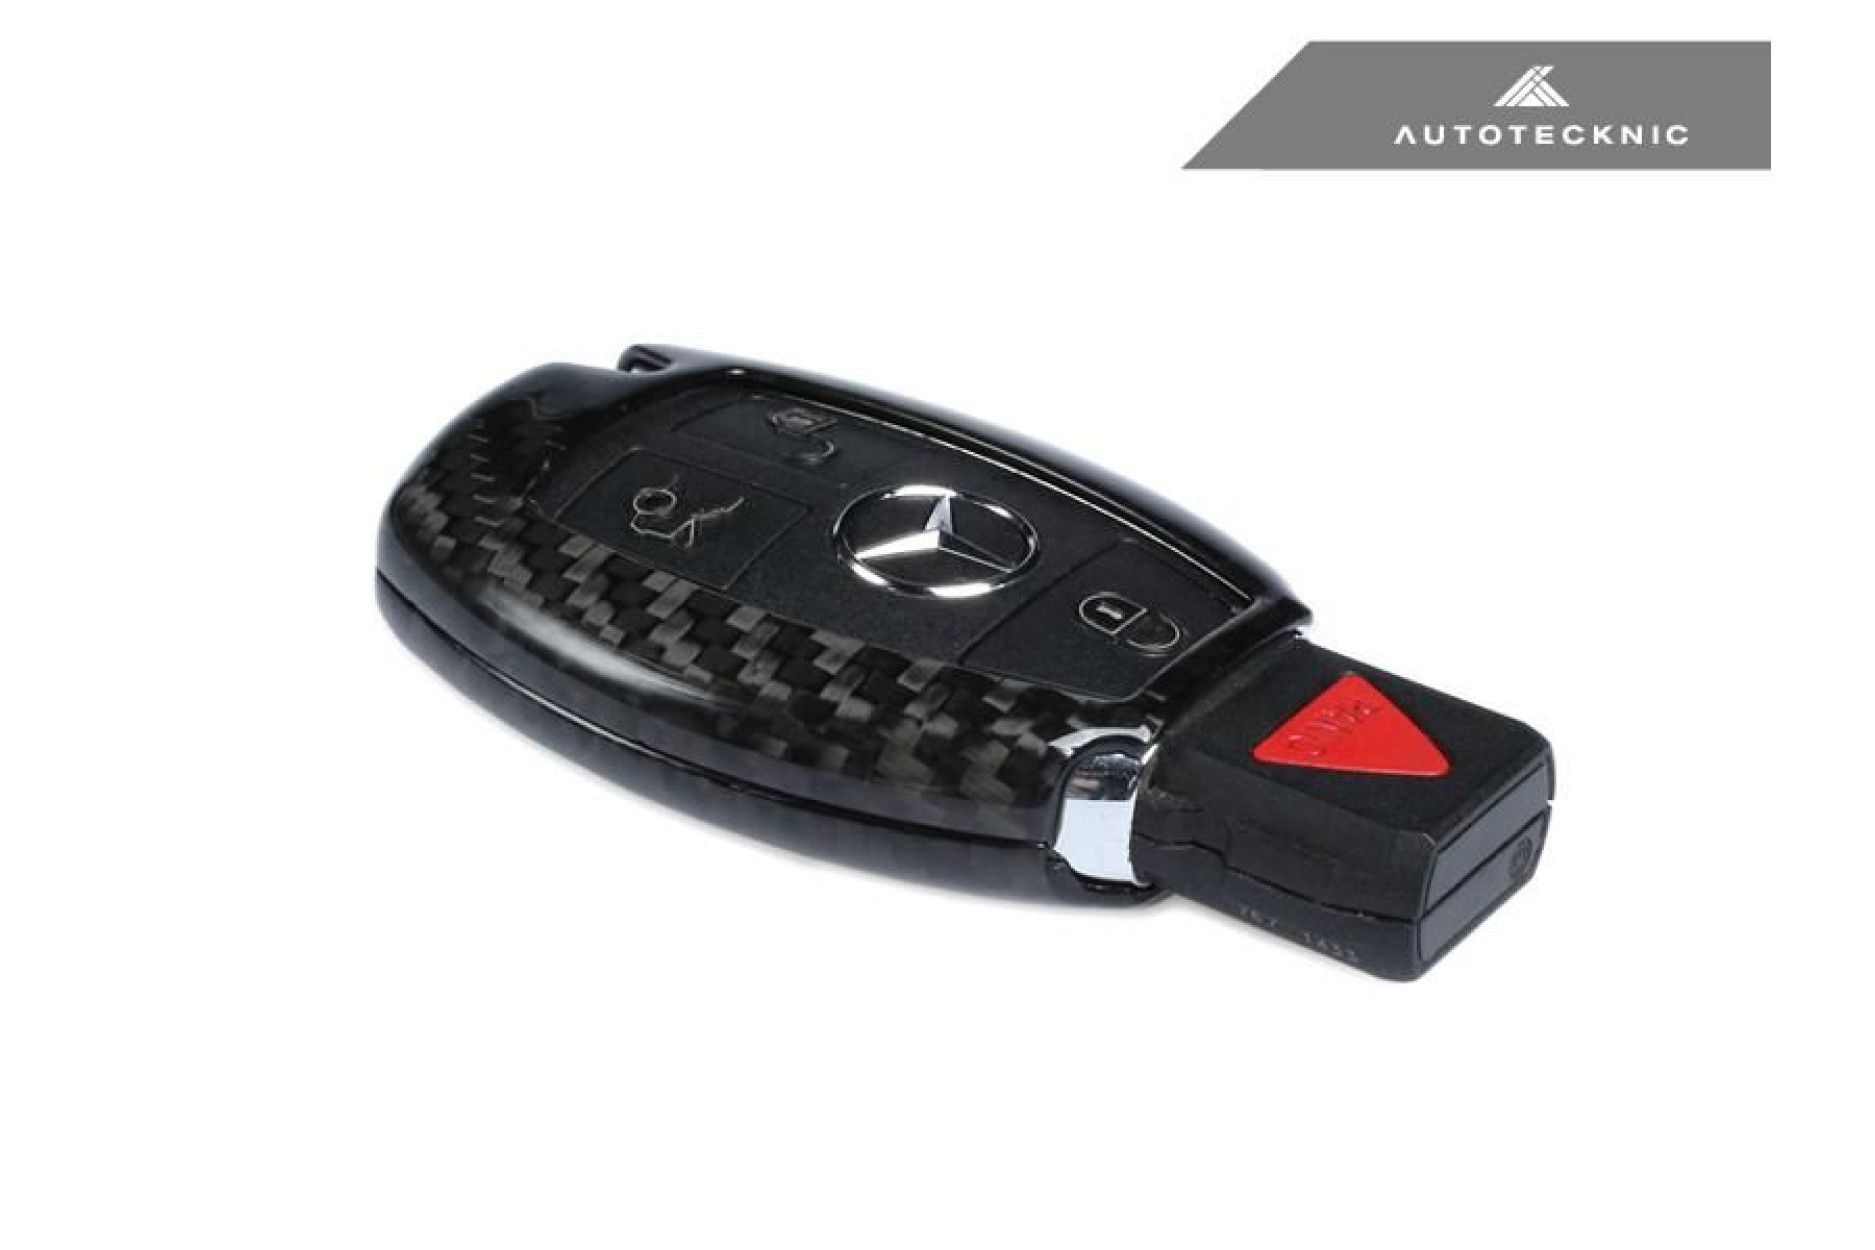 KEYSCOVER Autoschlüsselhülle für Mercedes-Benz Schlüssel - Cover